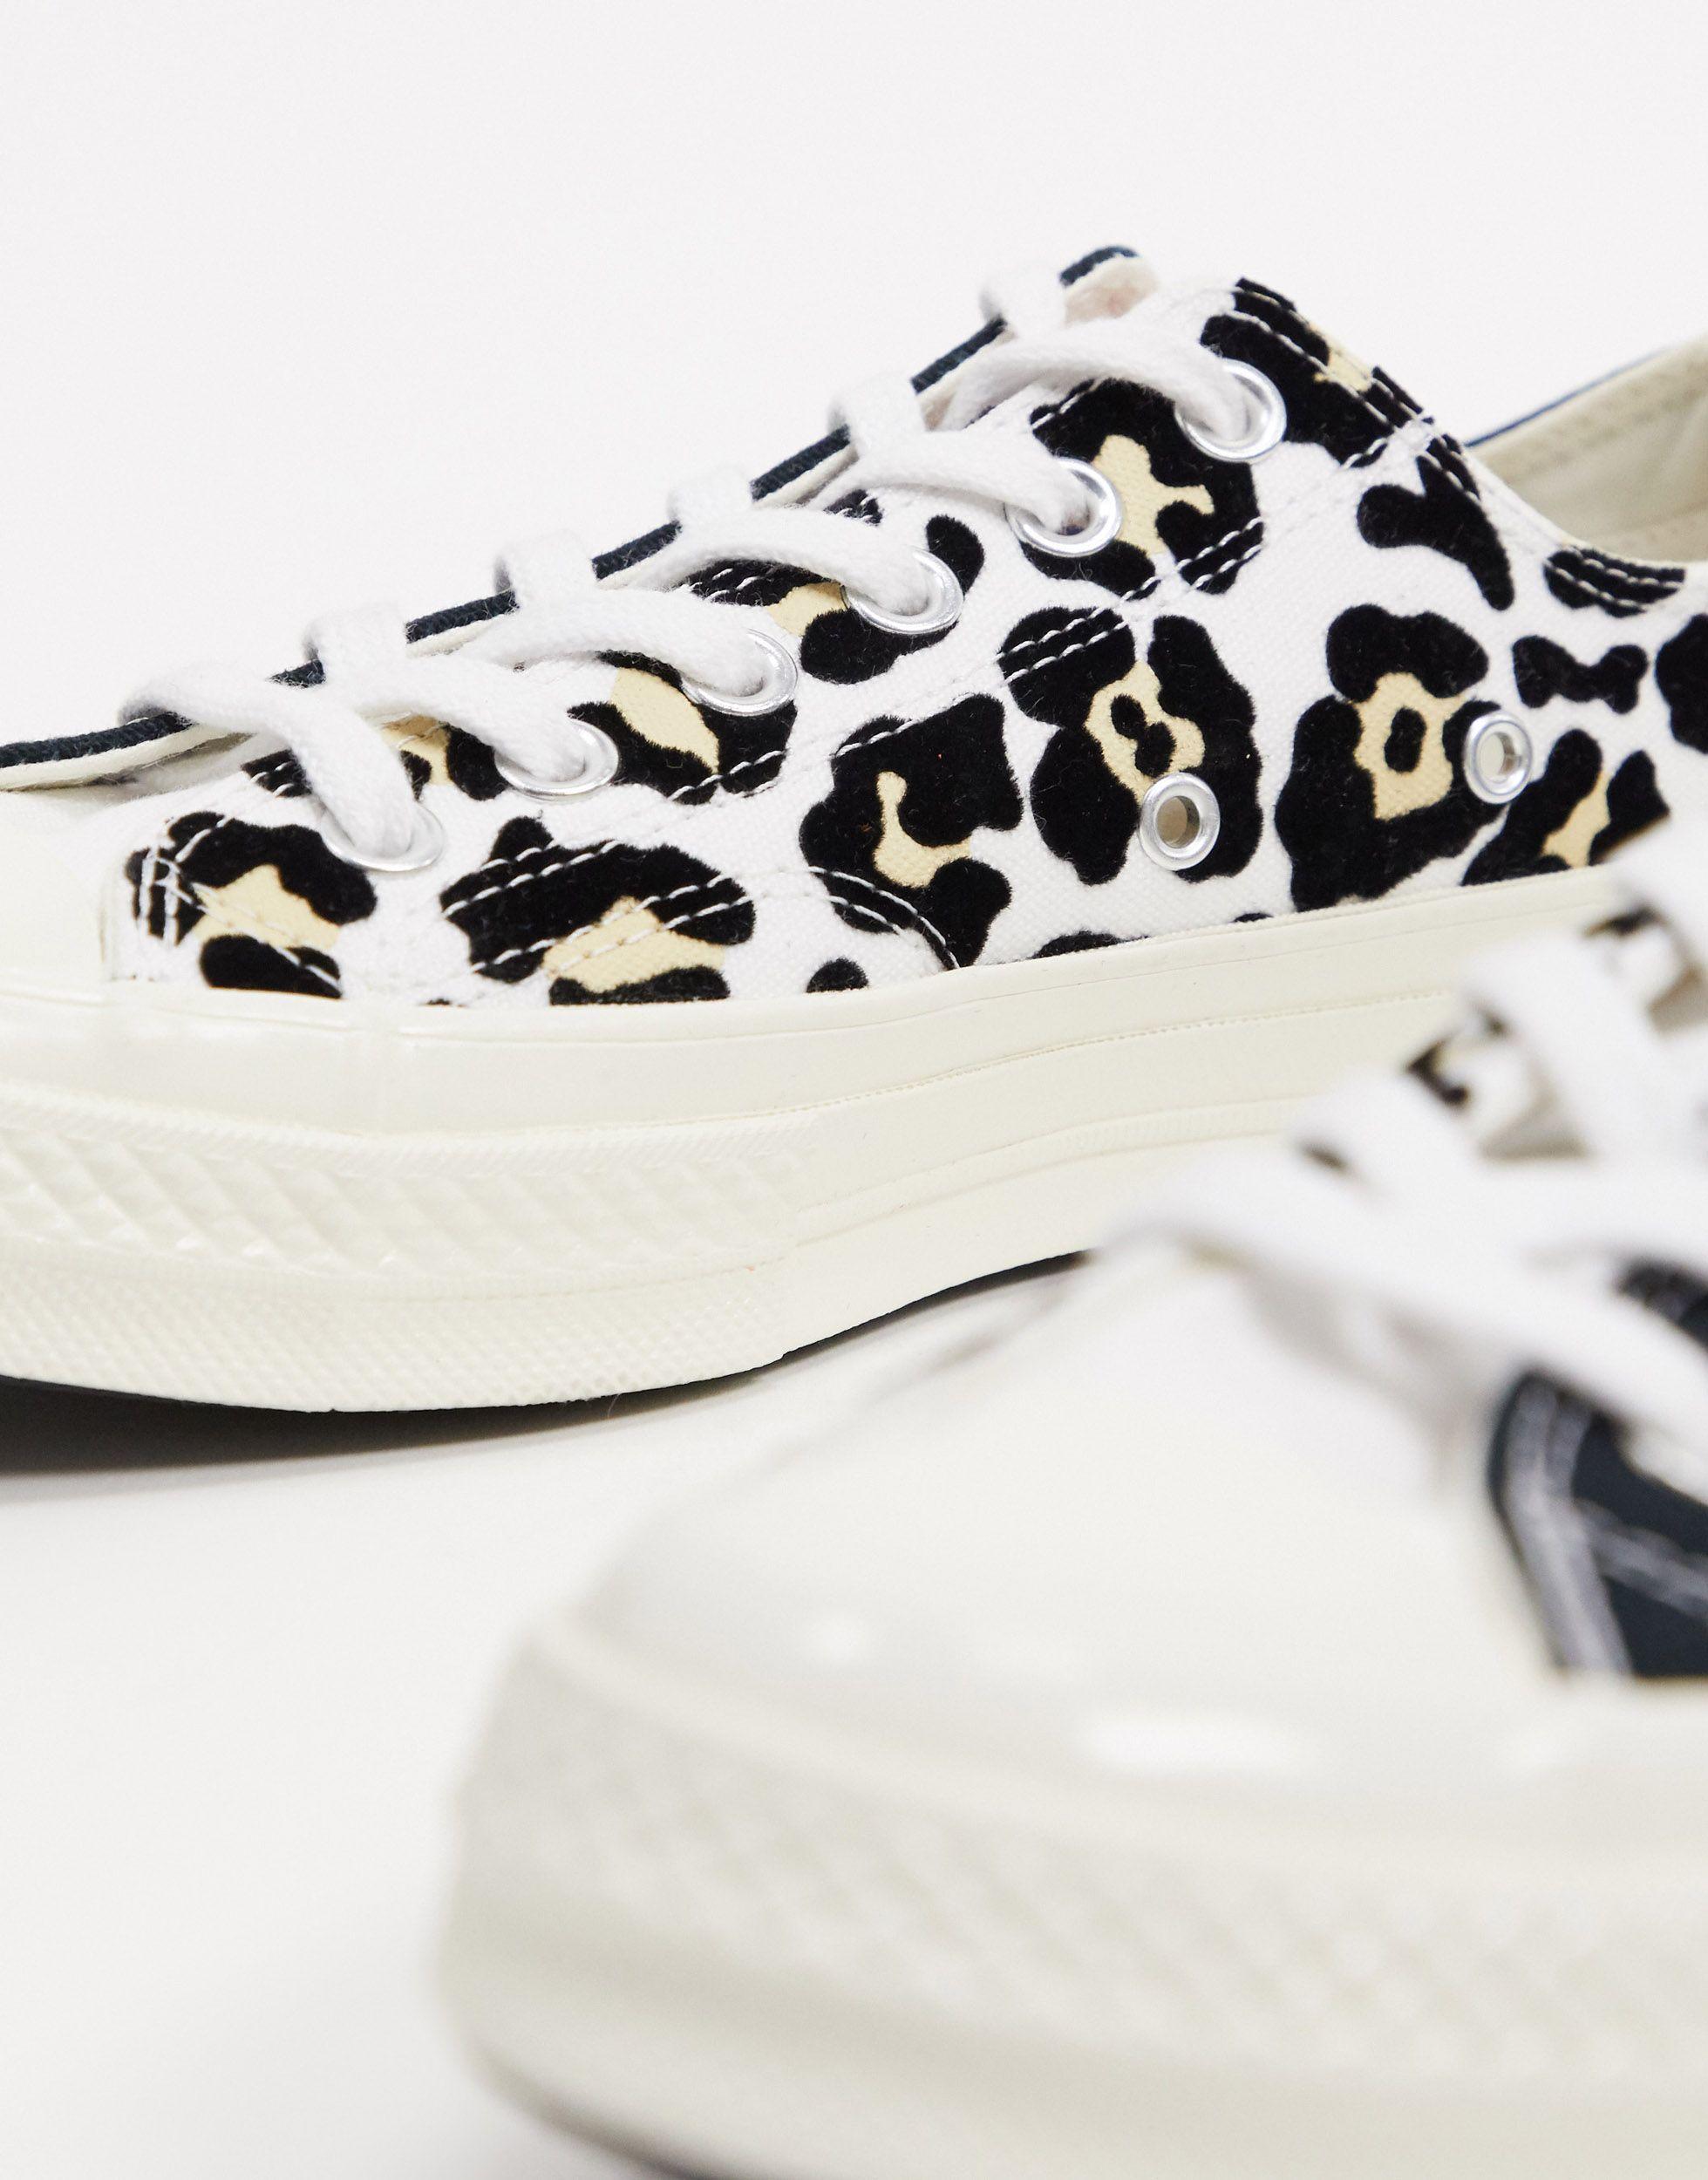 Converse Chuck 70 Ox Flocked Leopard Print Sneakers in Black | Lyst